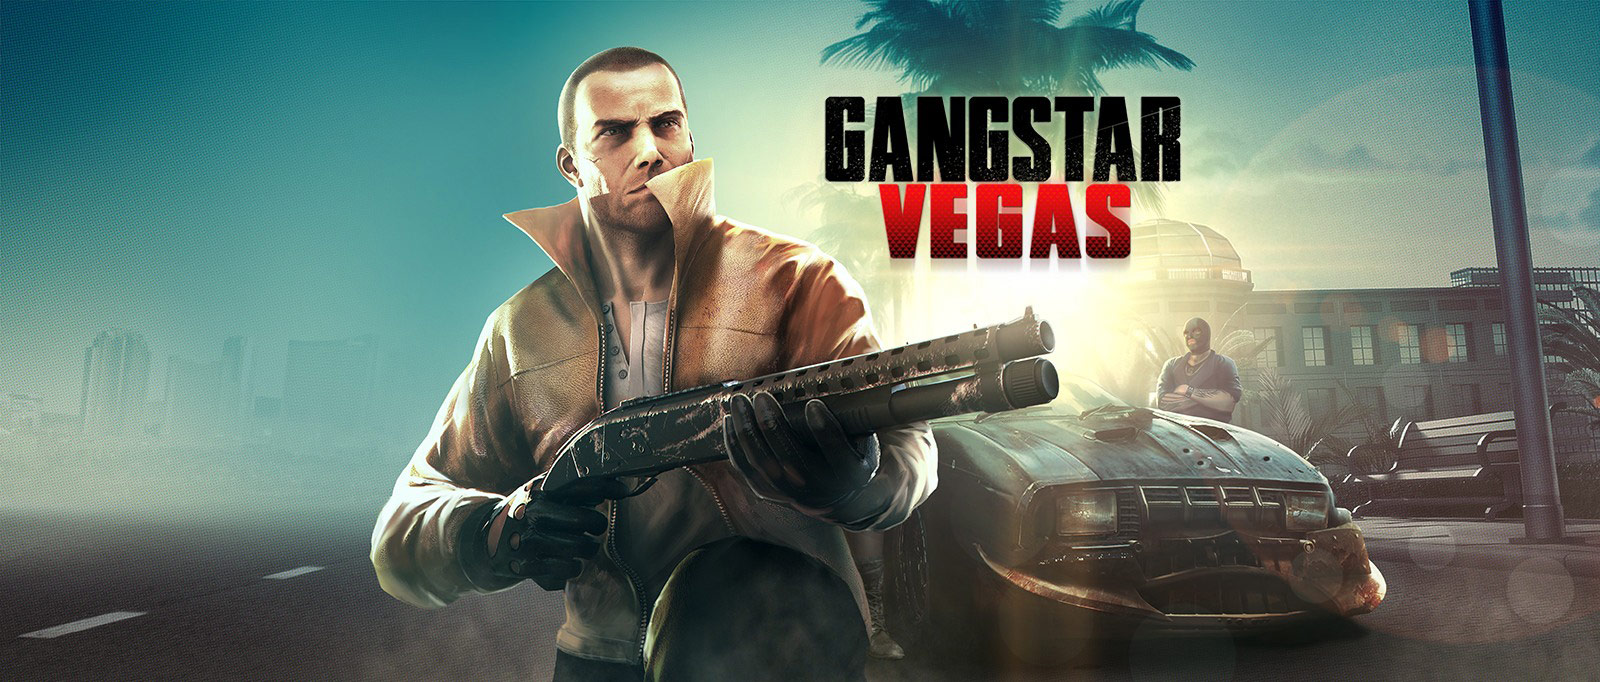 Gang Star Vegas Mod APK